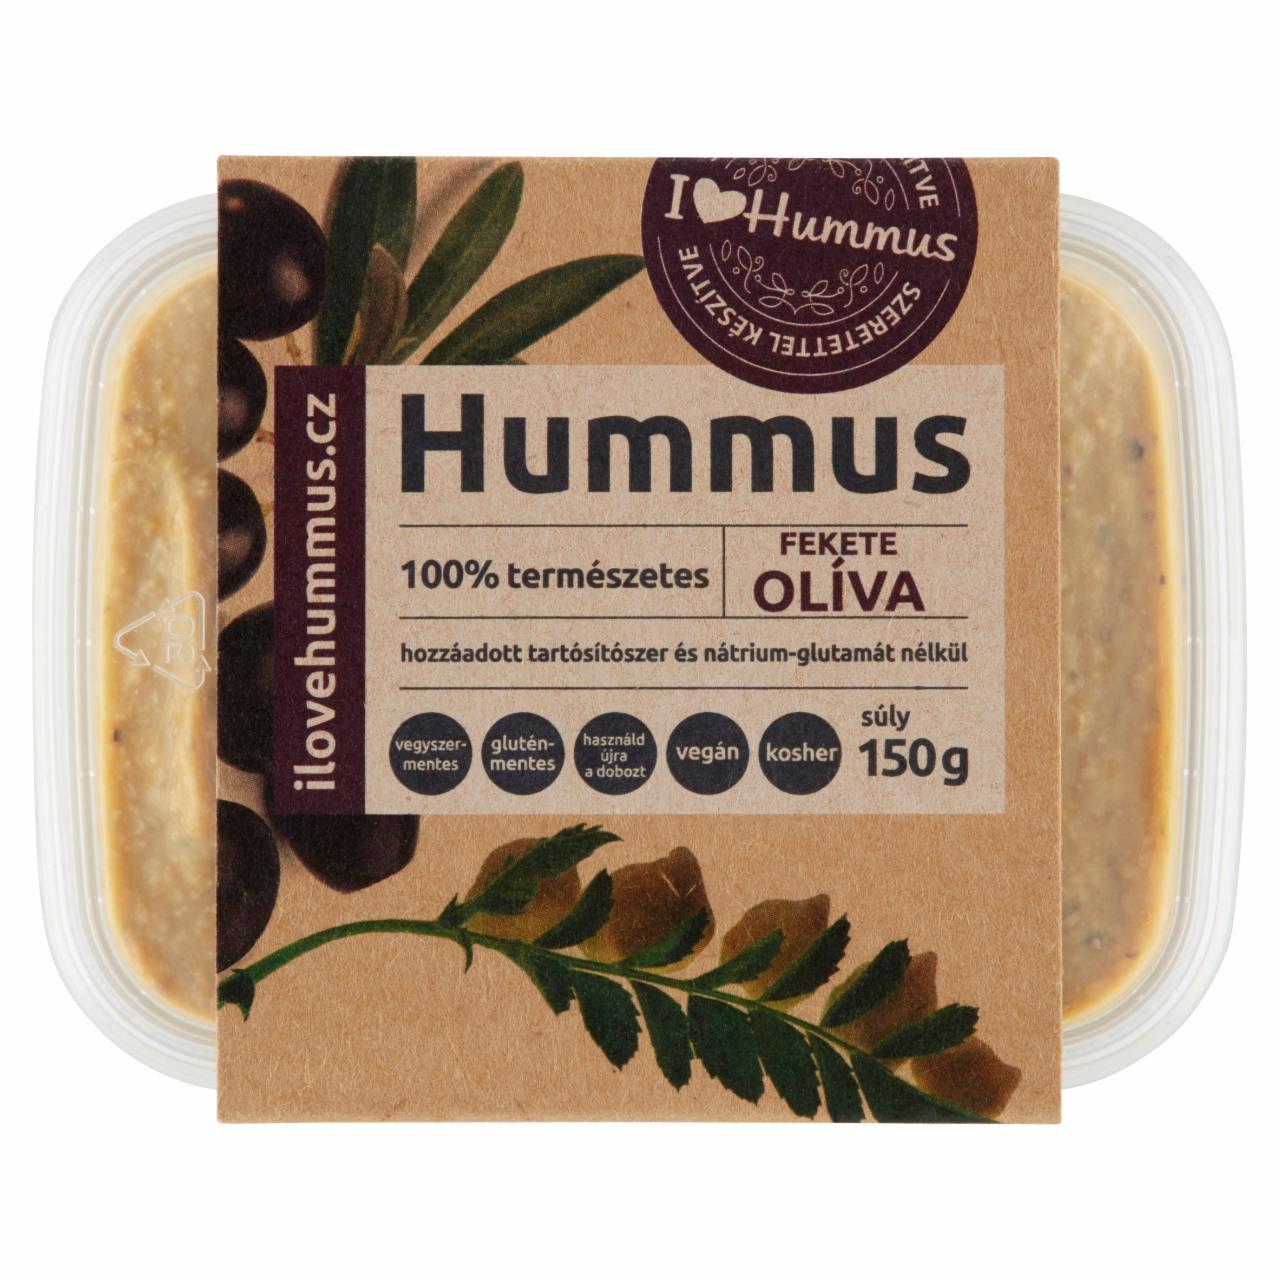 Képek - I love Hummus - hummusz fekete olíva 150 g